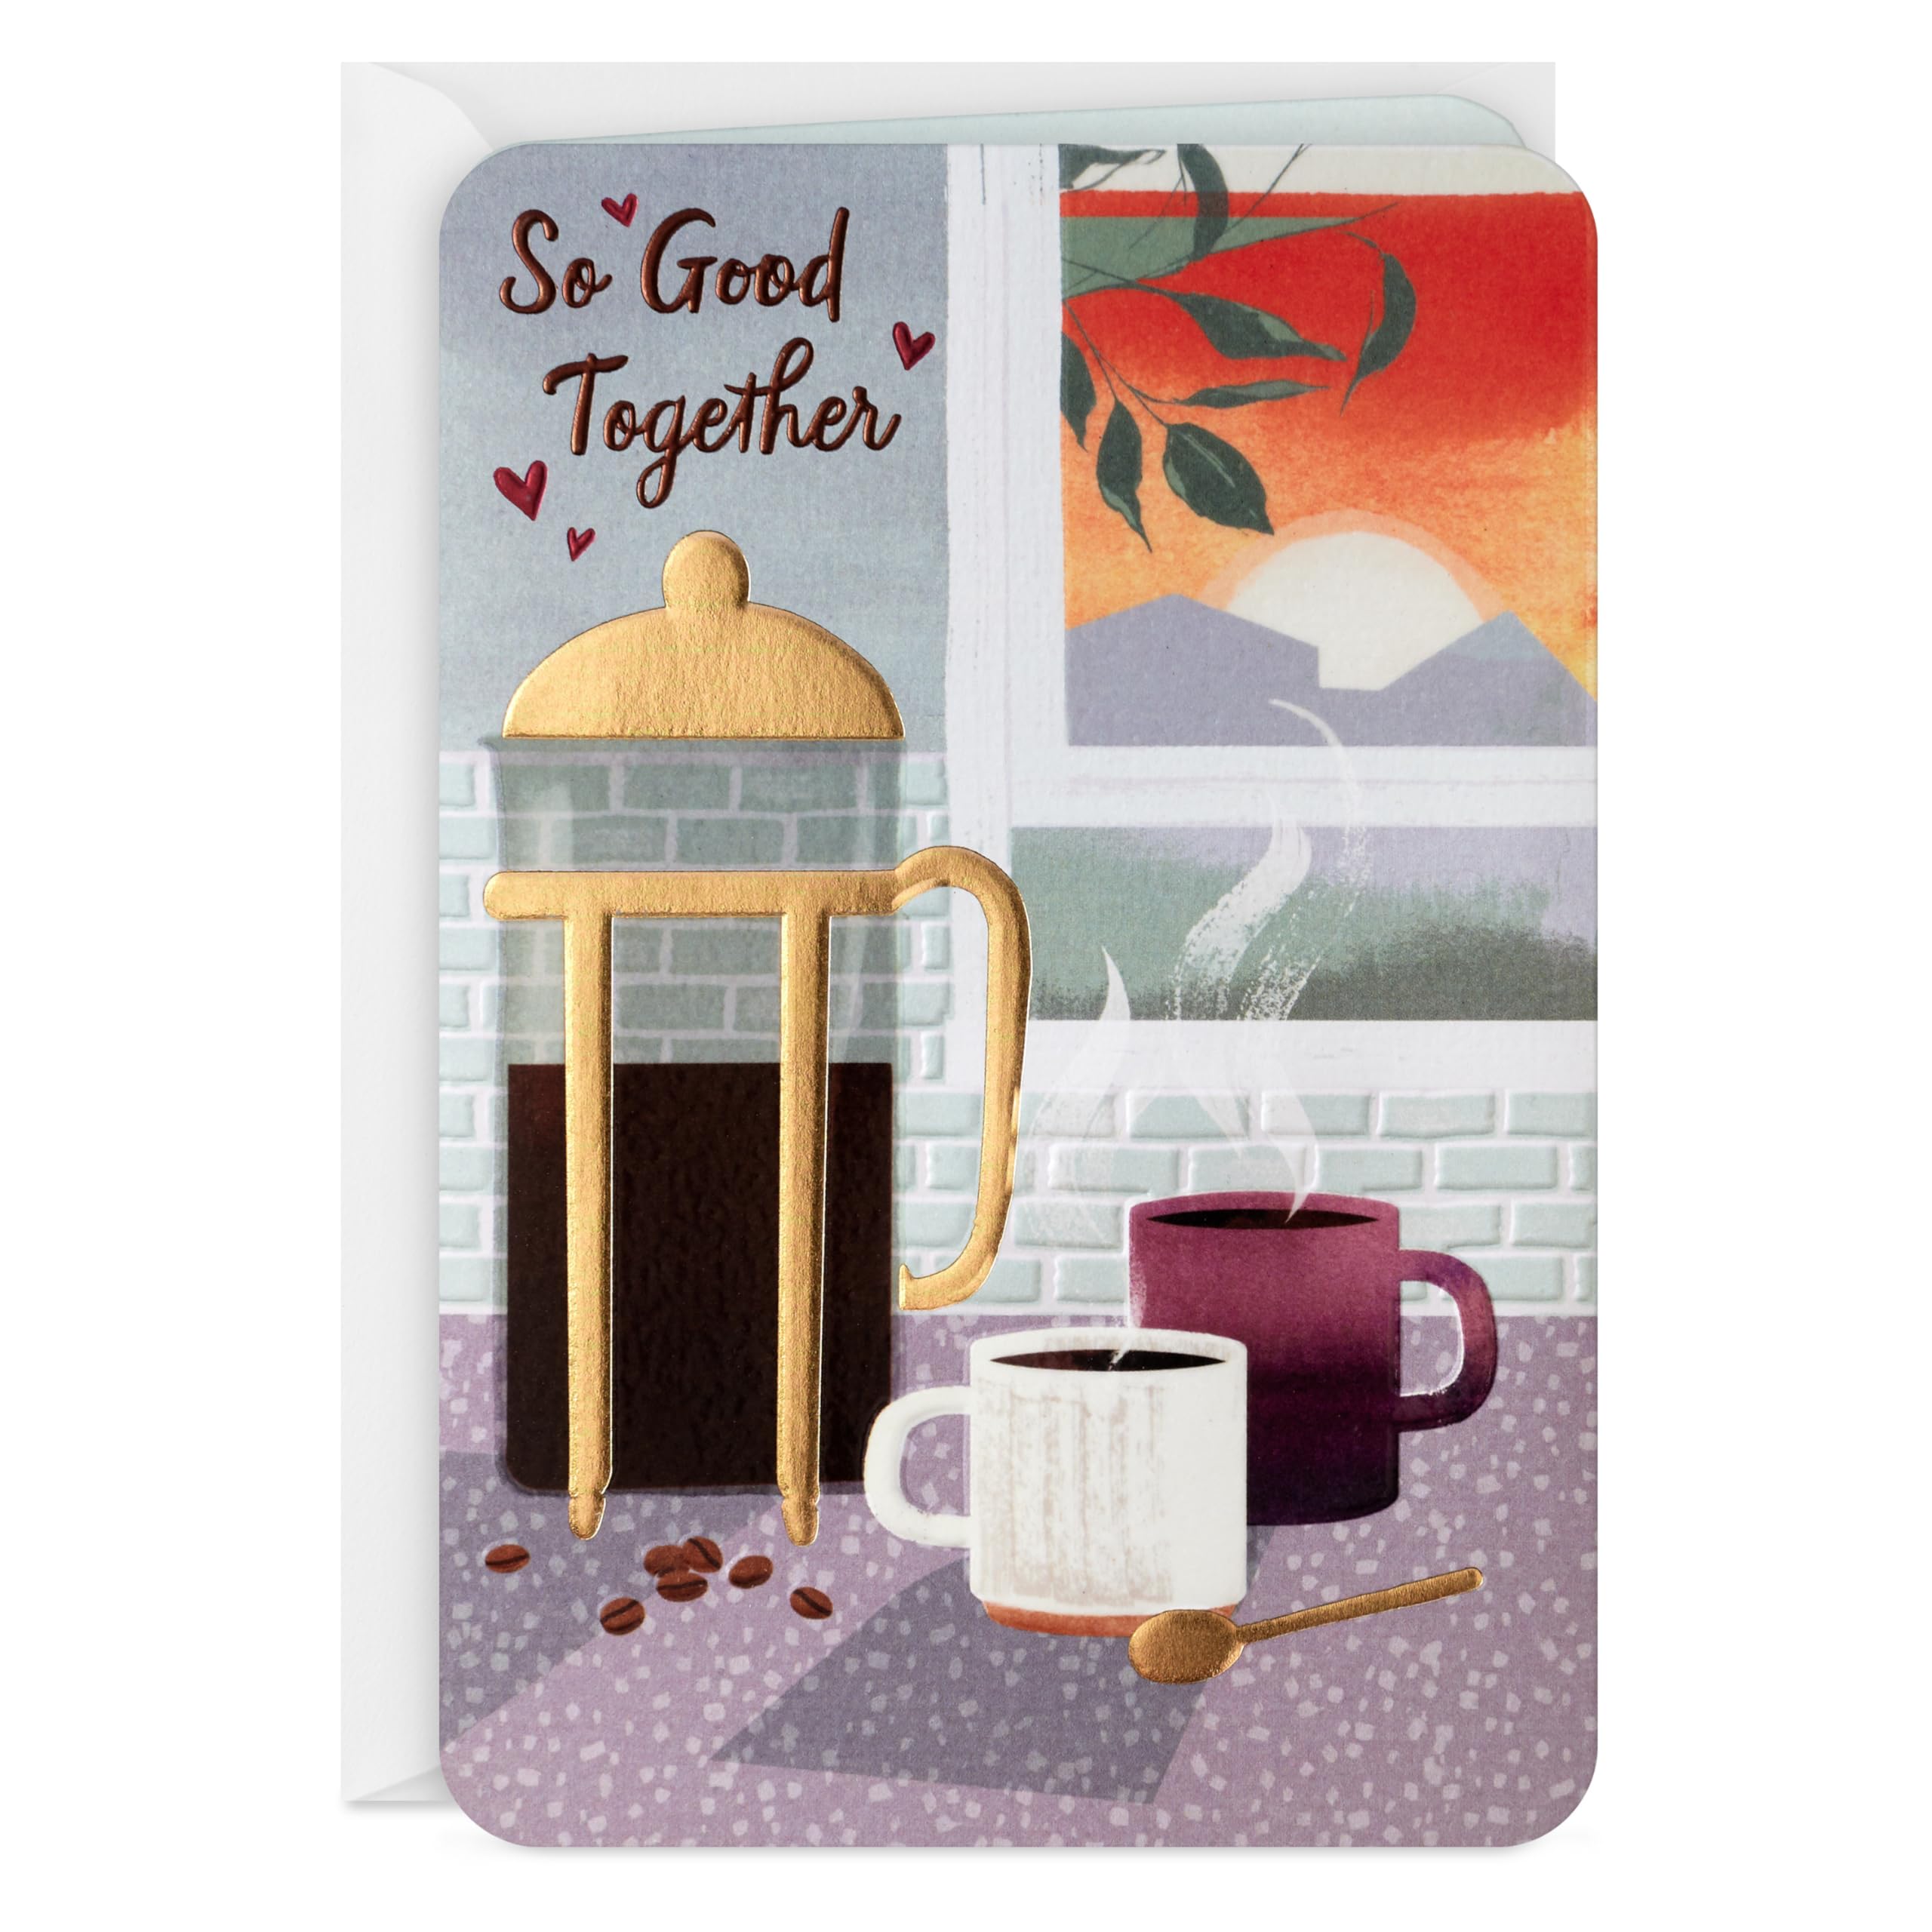 Hallmark Anniversary Card for Couple (Coffee, So Good Together)